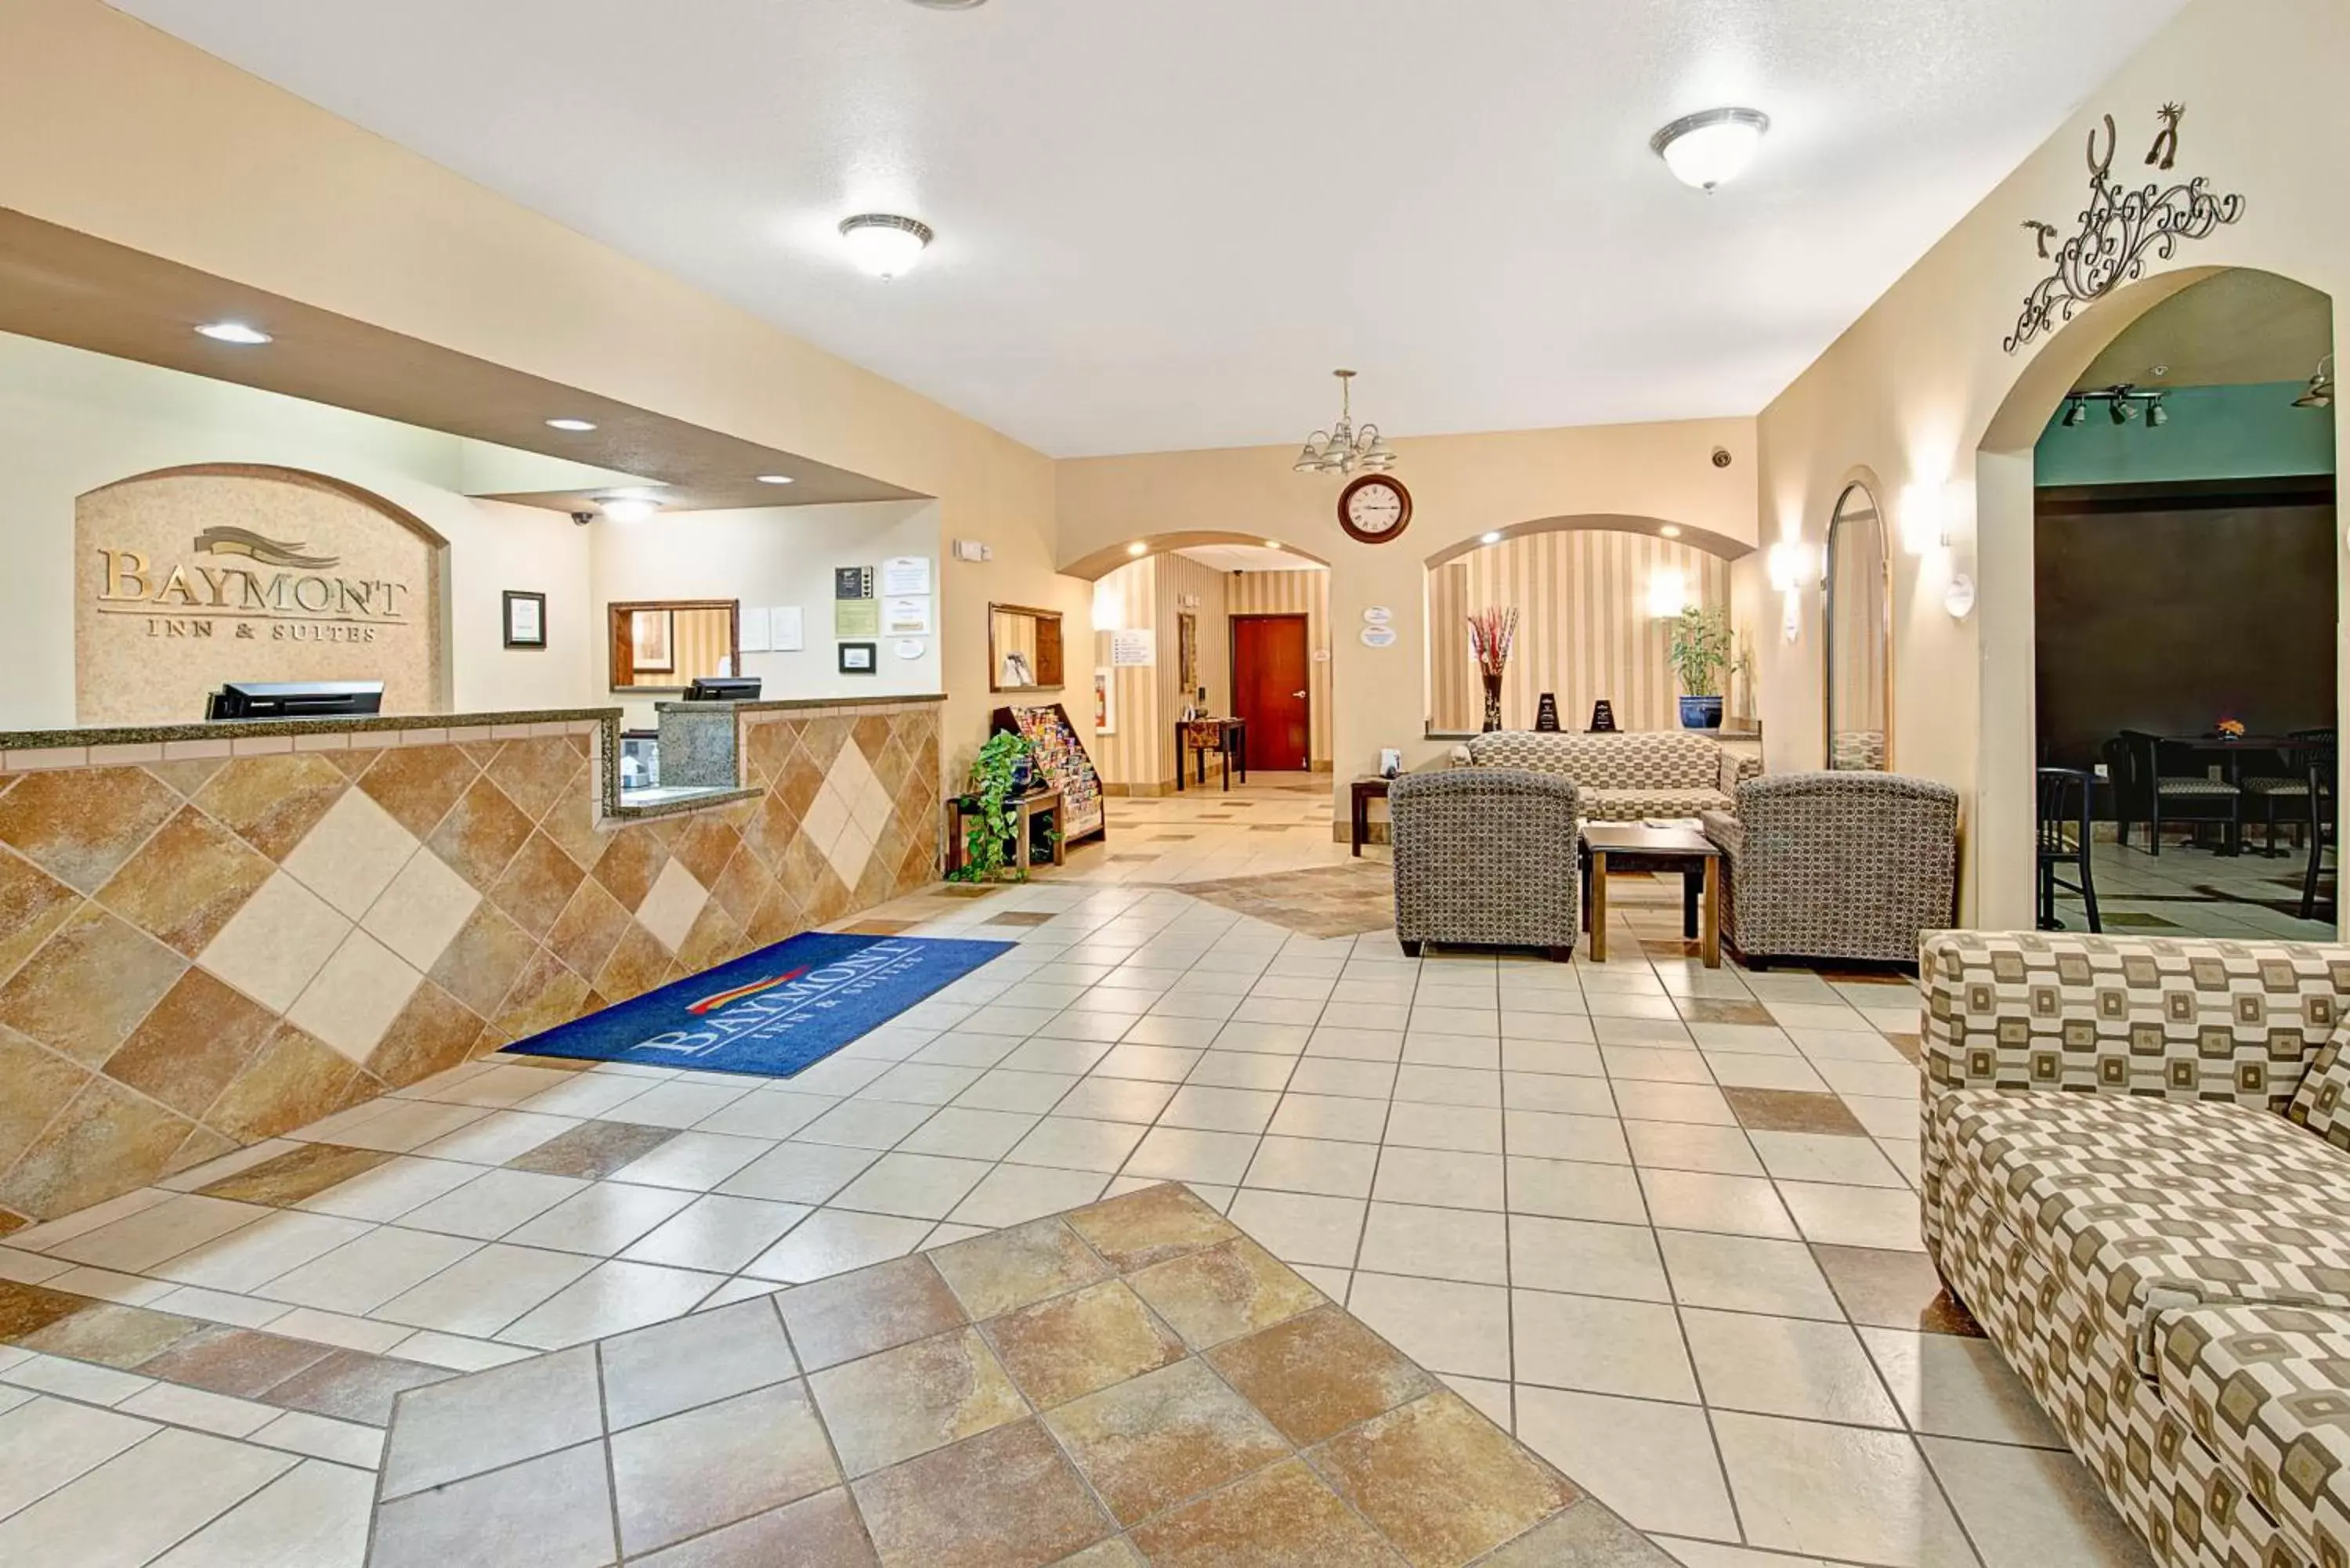 Lobby or reception in Baymont by Wyndham Decatur